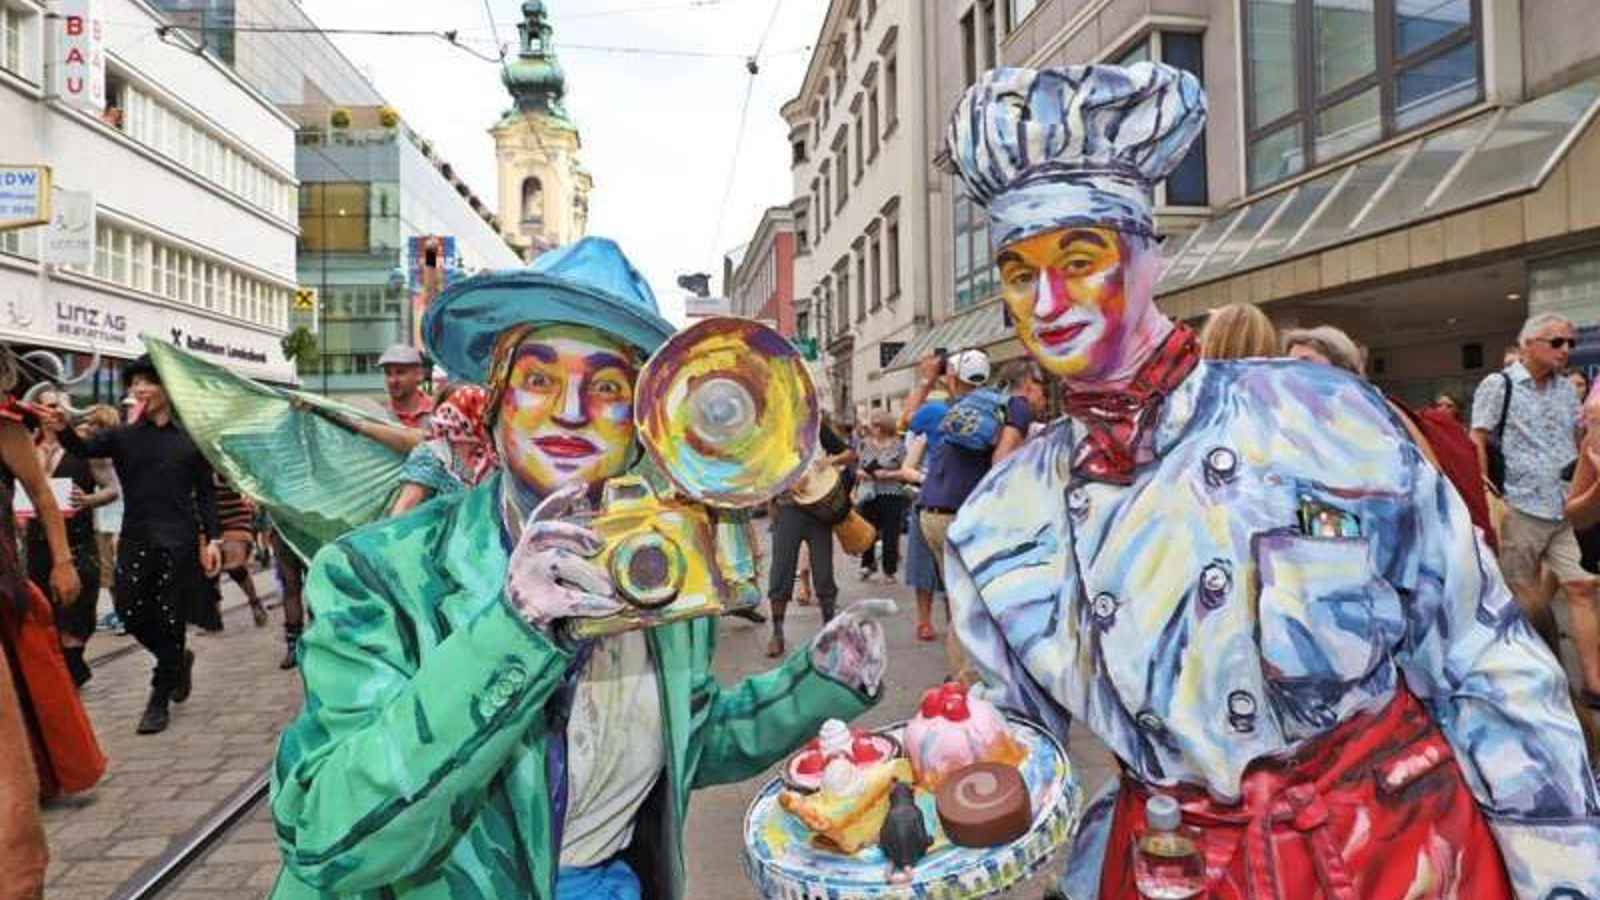 10-facts-about-pflasterspektakel-street-arts-festival